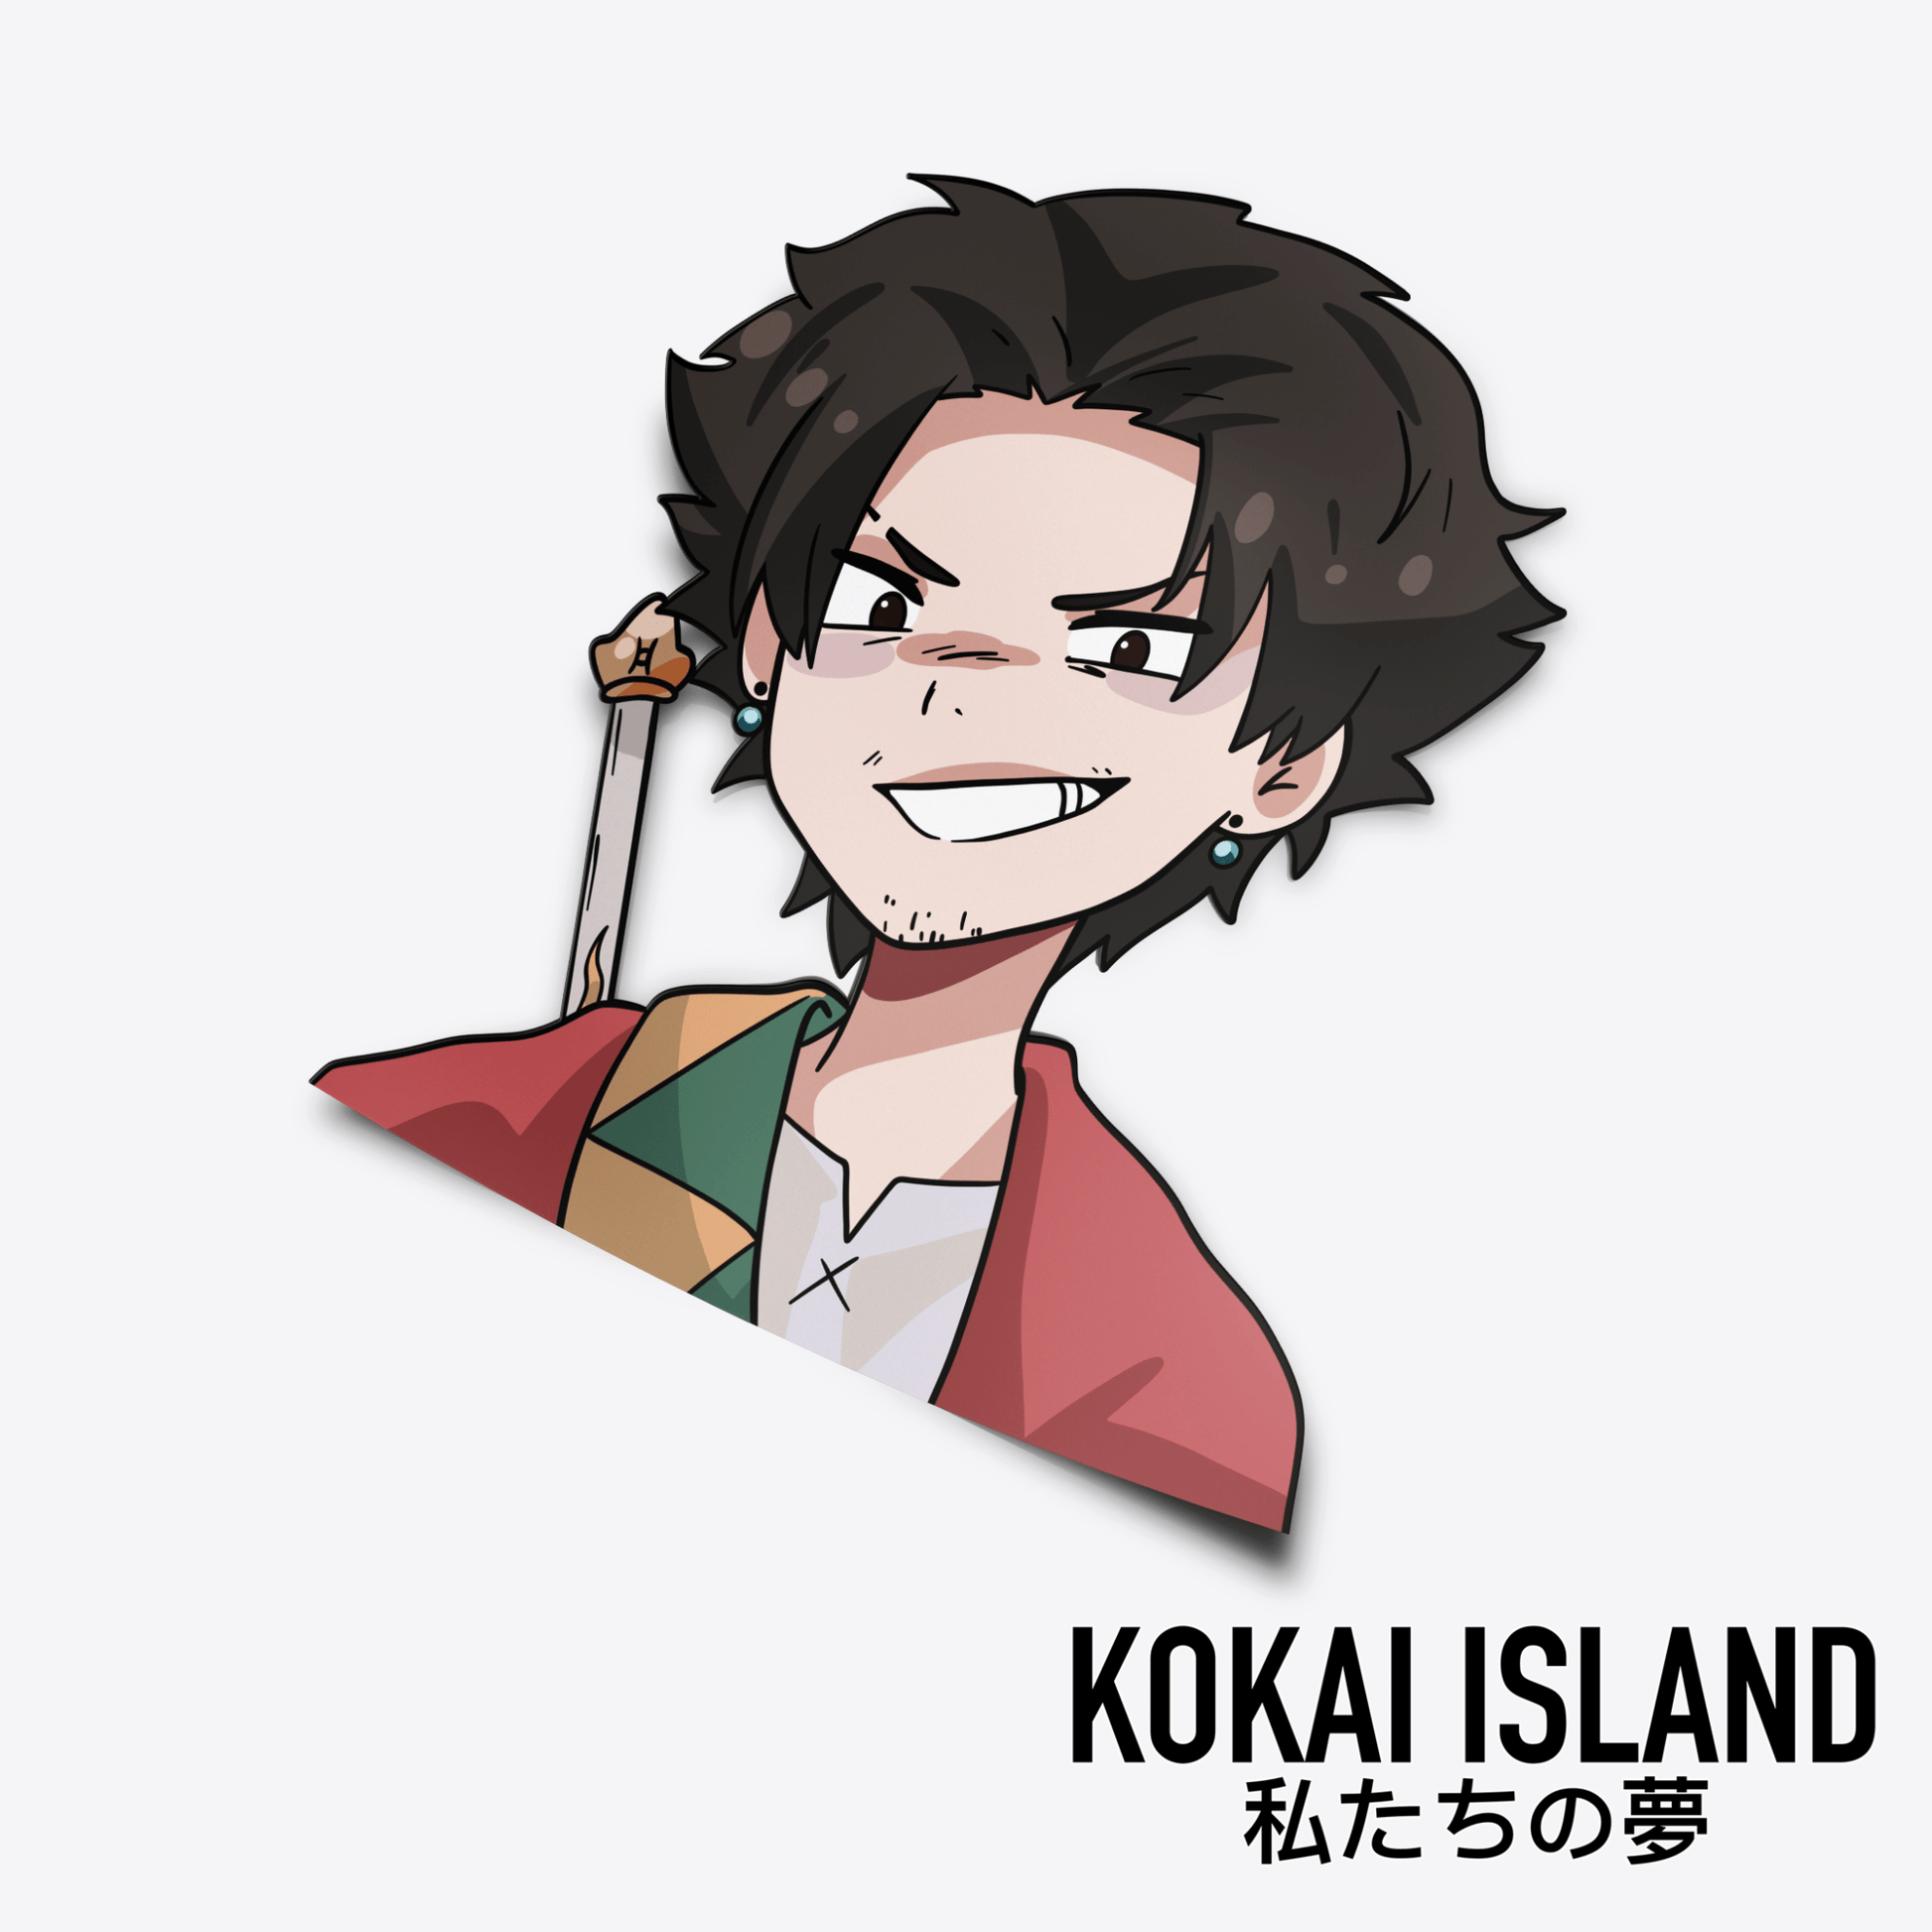 Mugen DecalDecalKokai Island